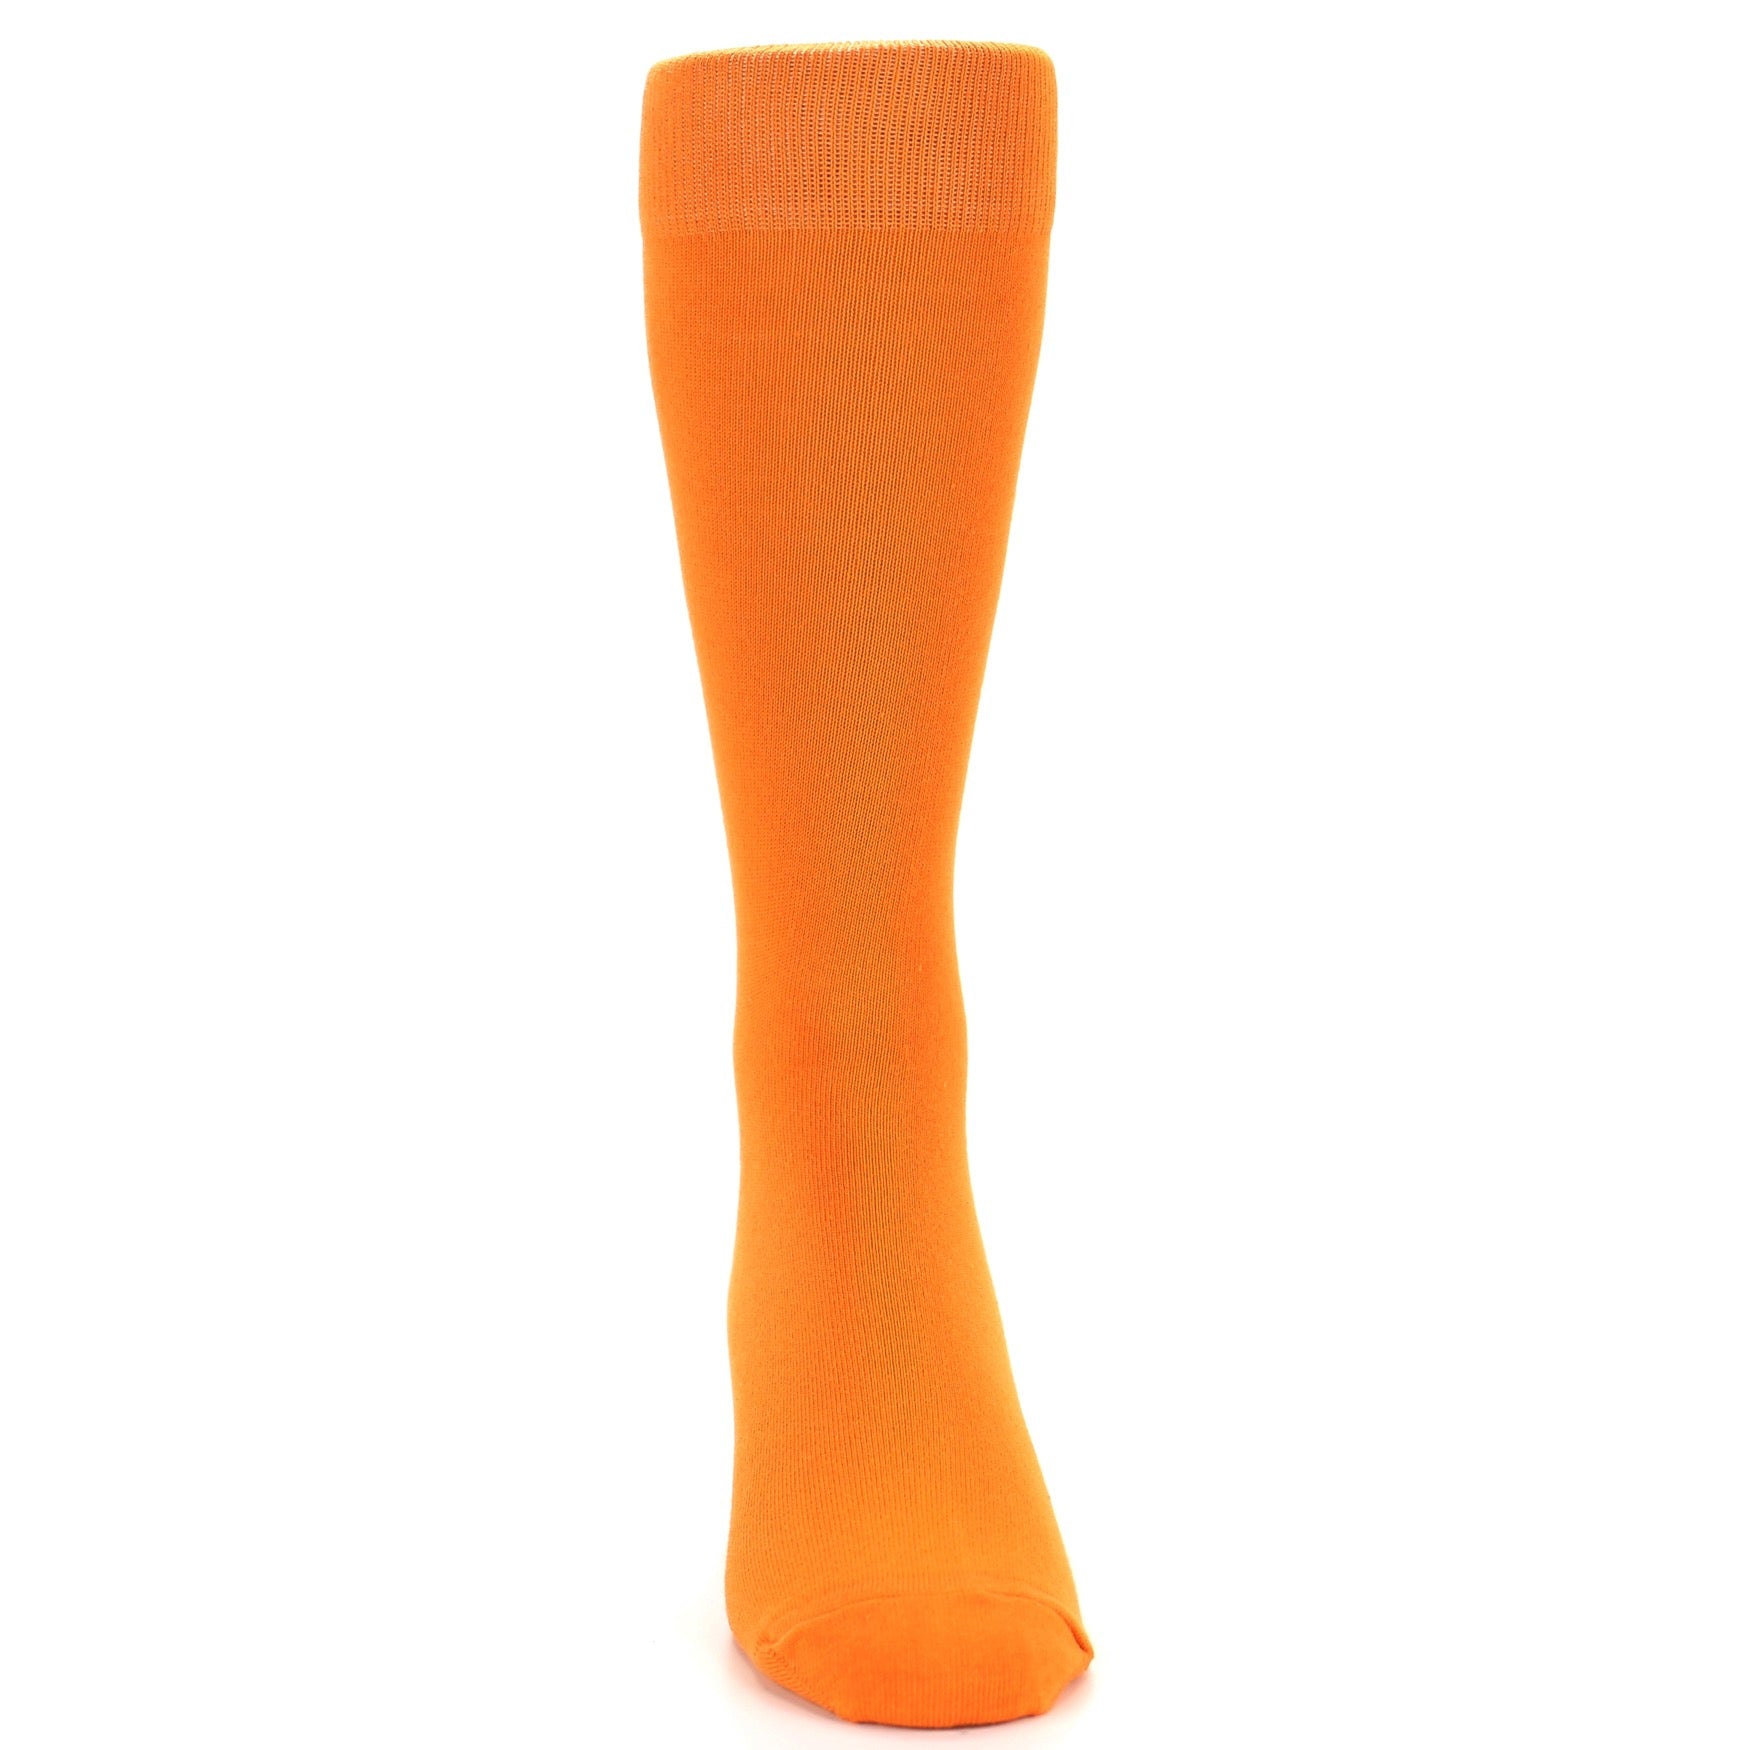 Tangerine Orange Solid Color Men's Dress Socks